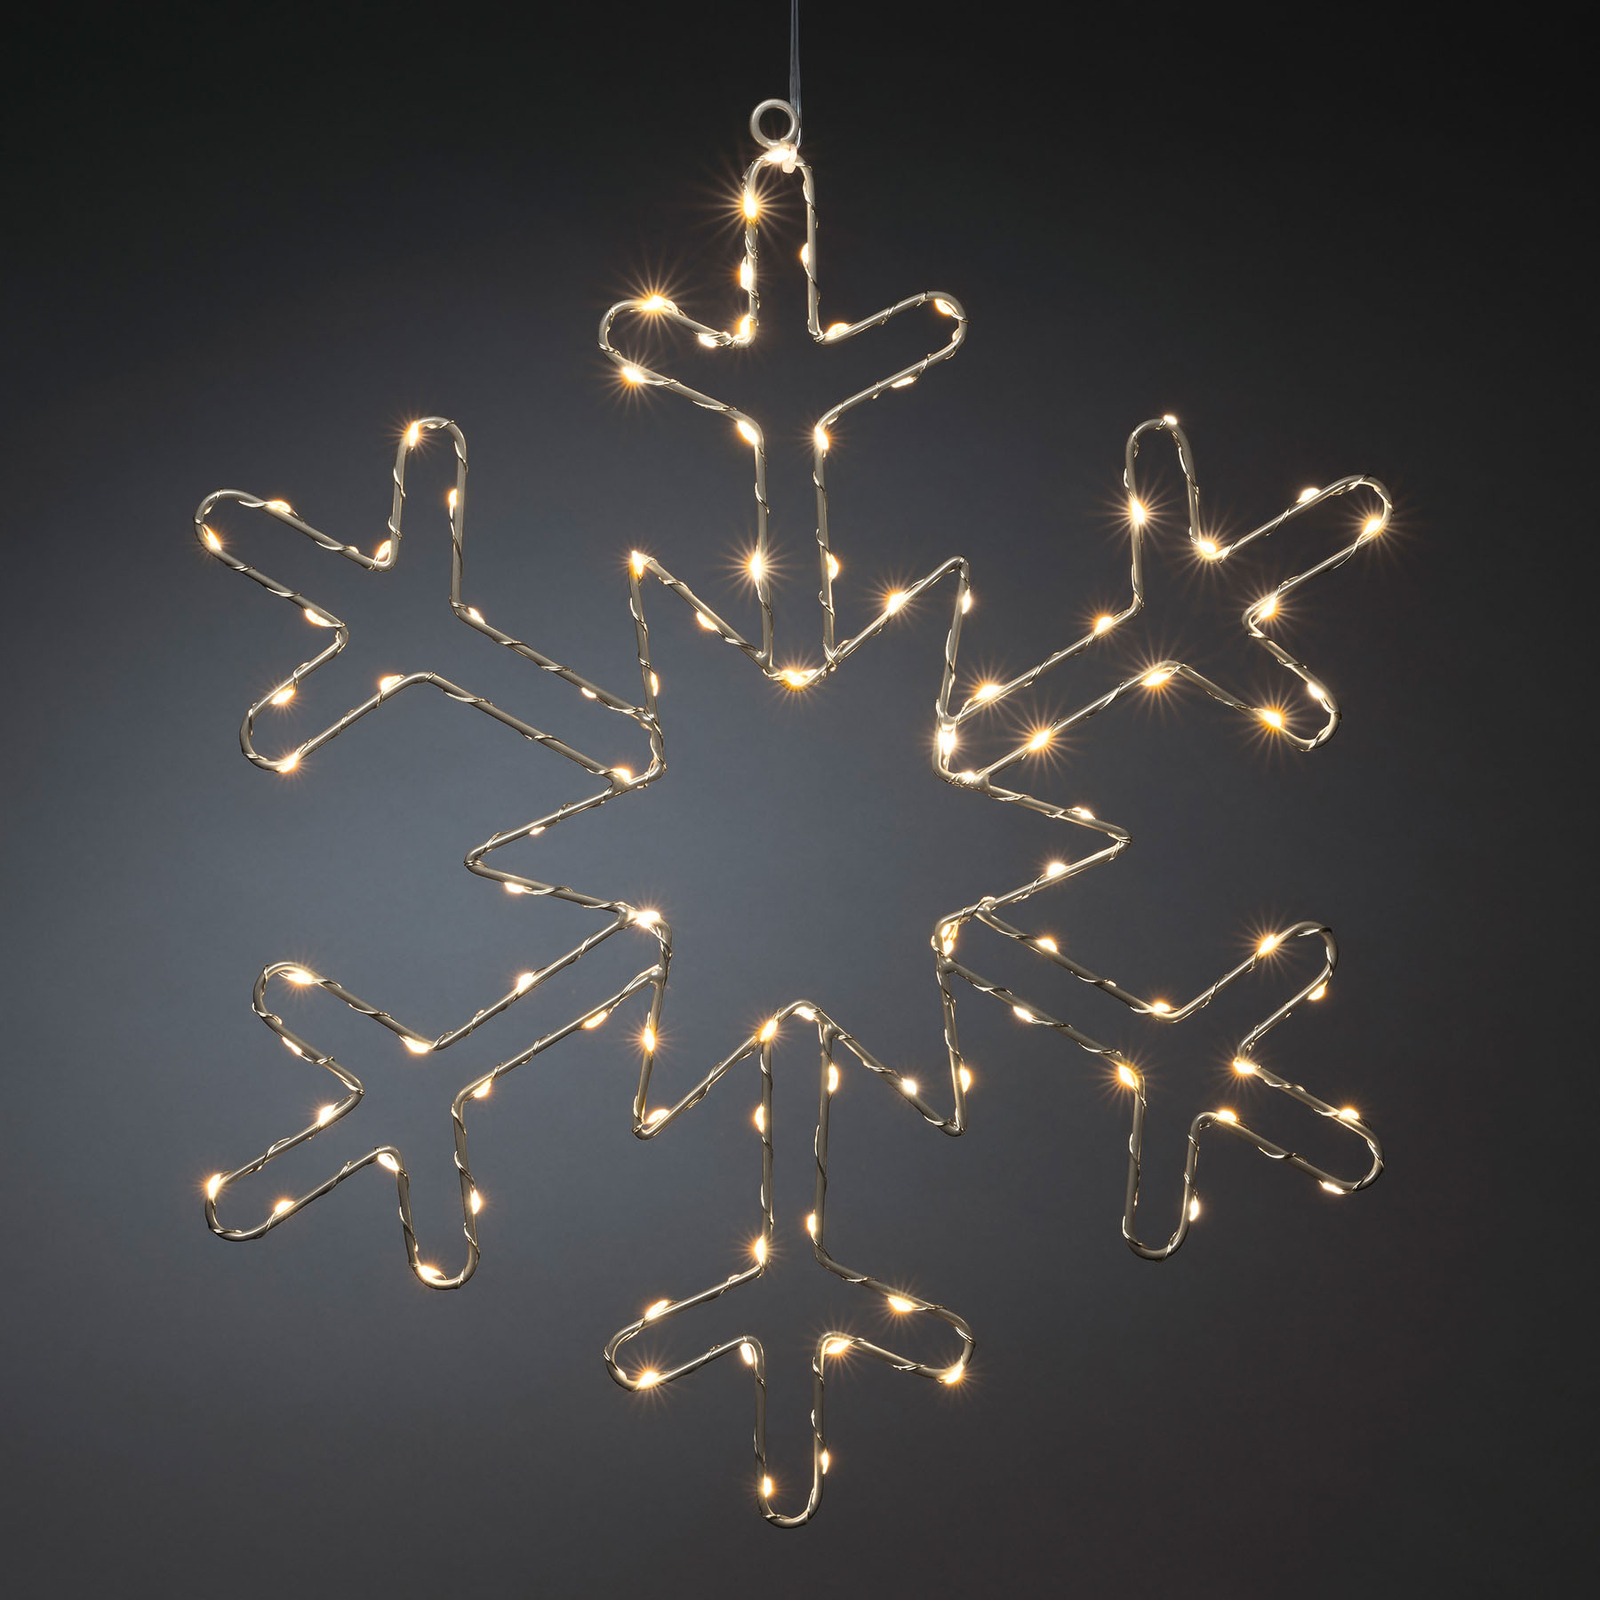 Silver Snowflake LED decorative light